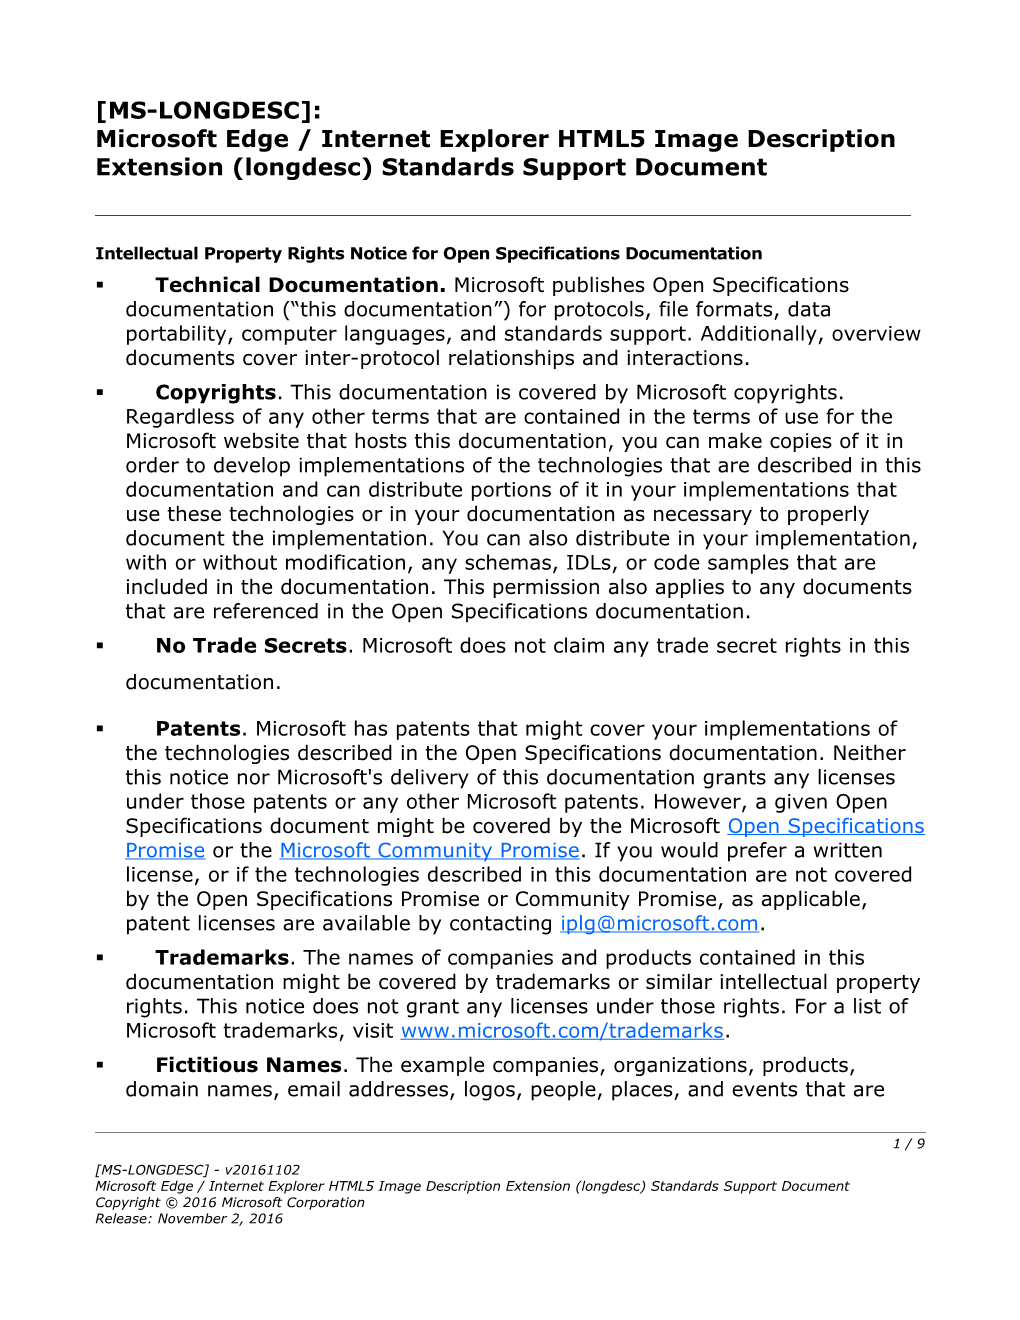 Microsoft Edge / Internet Explorer HTML5 Image Description Extension (Longdesc) Standards